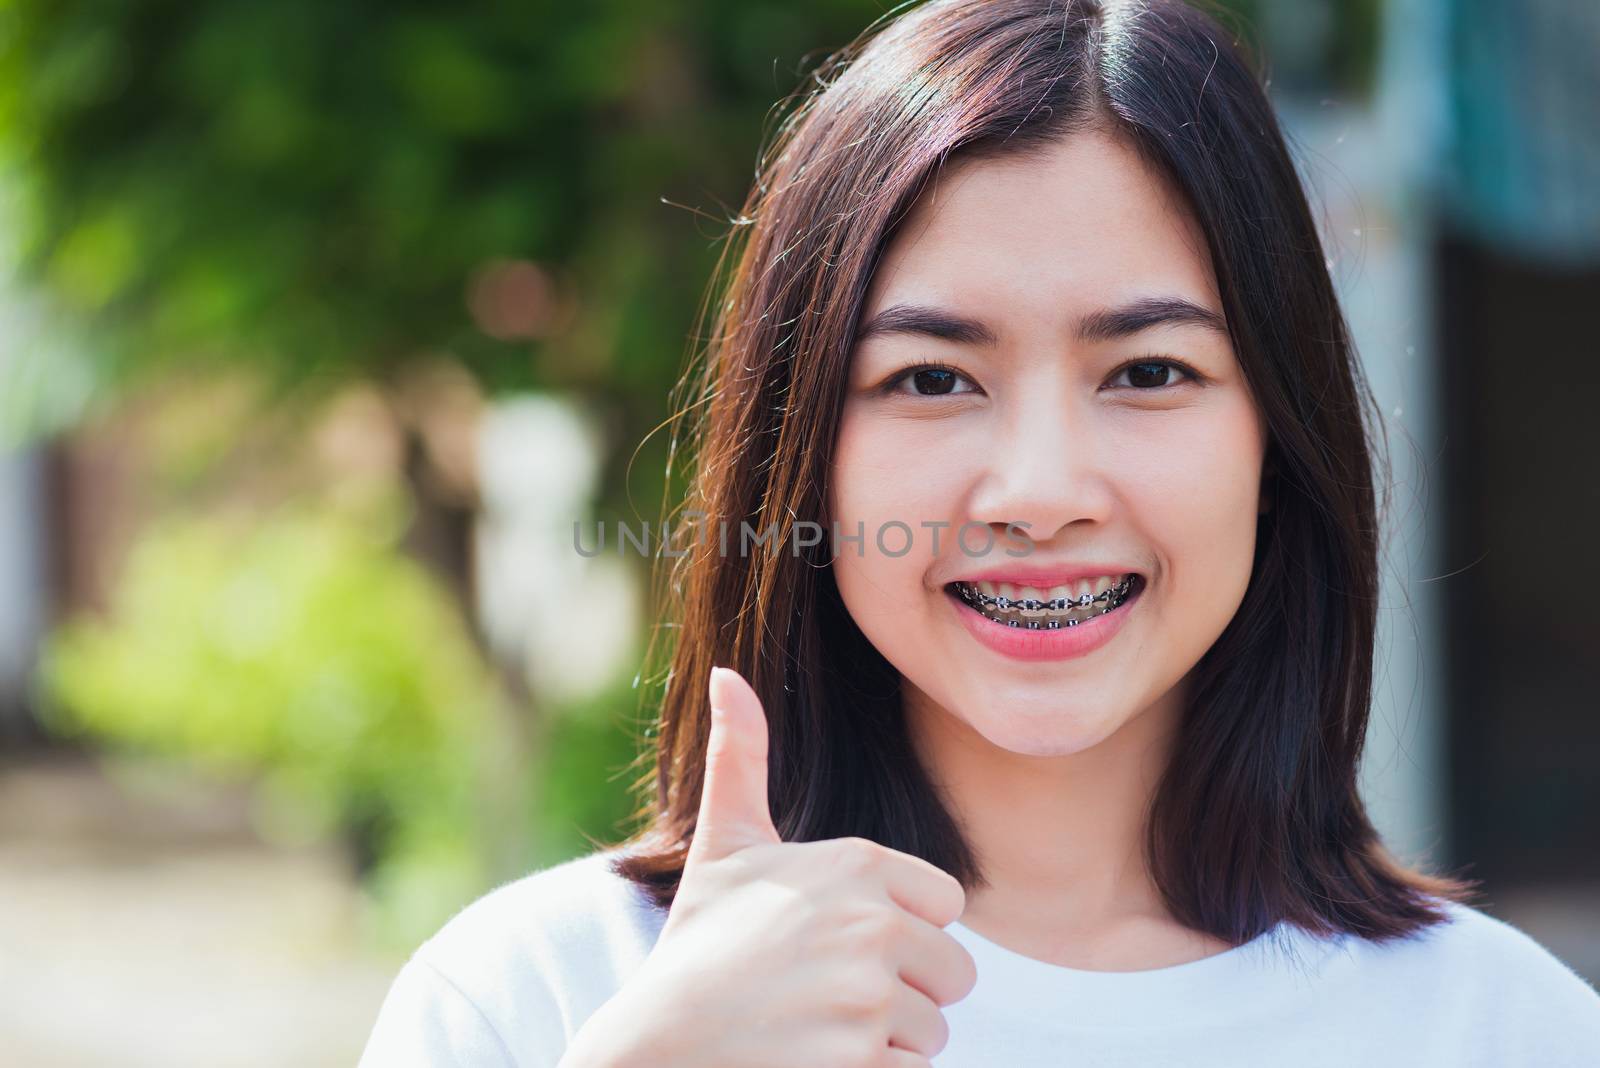 woman smile have dental braces on teeth laughing outdoor by Sorapop